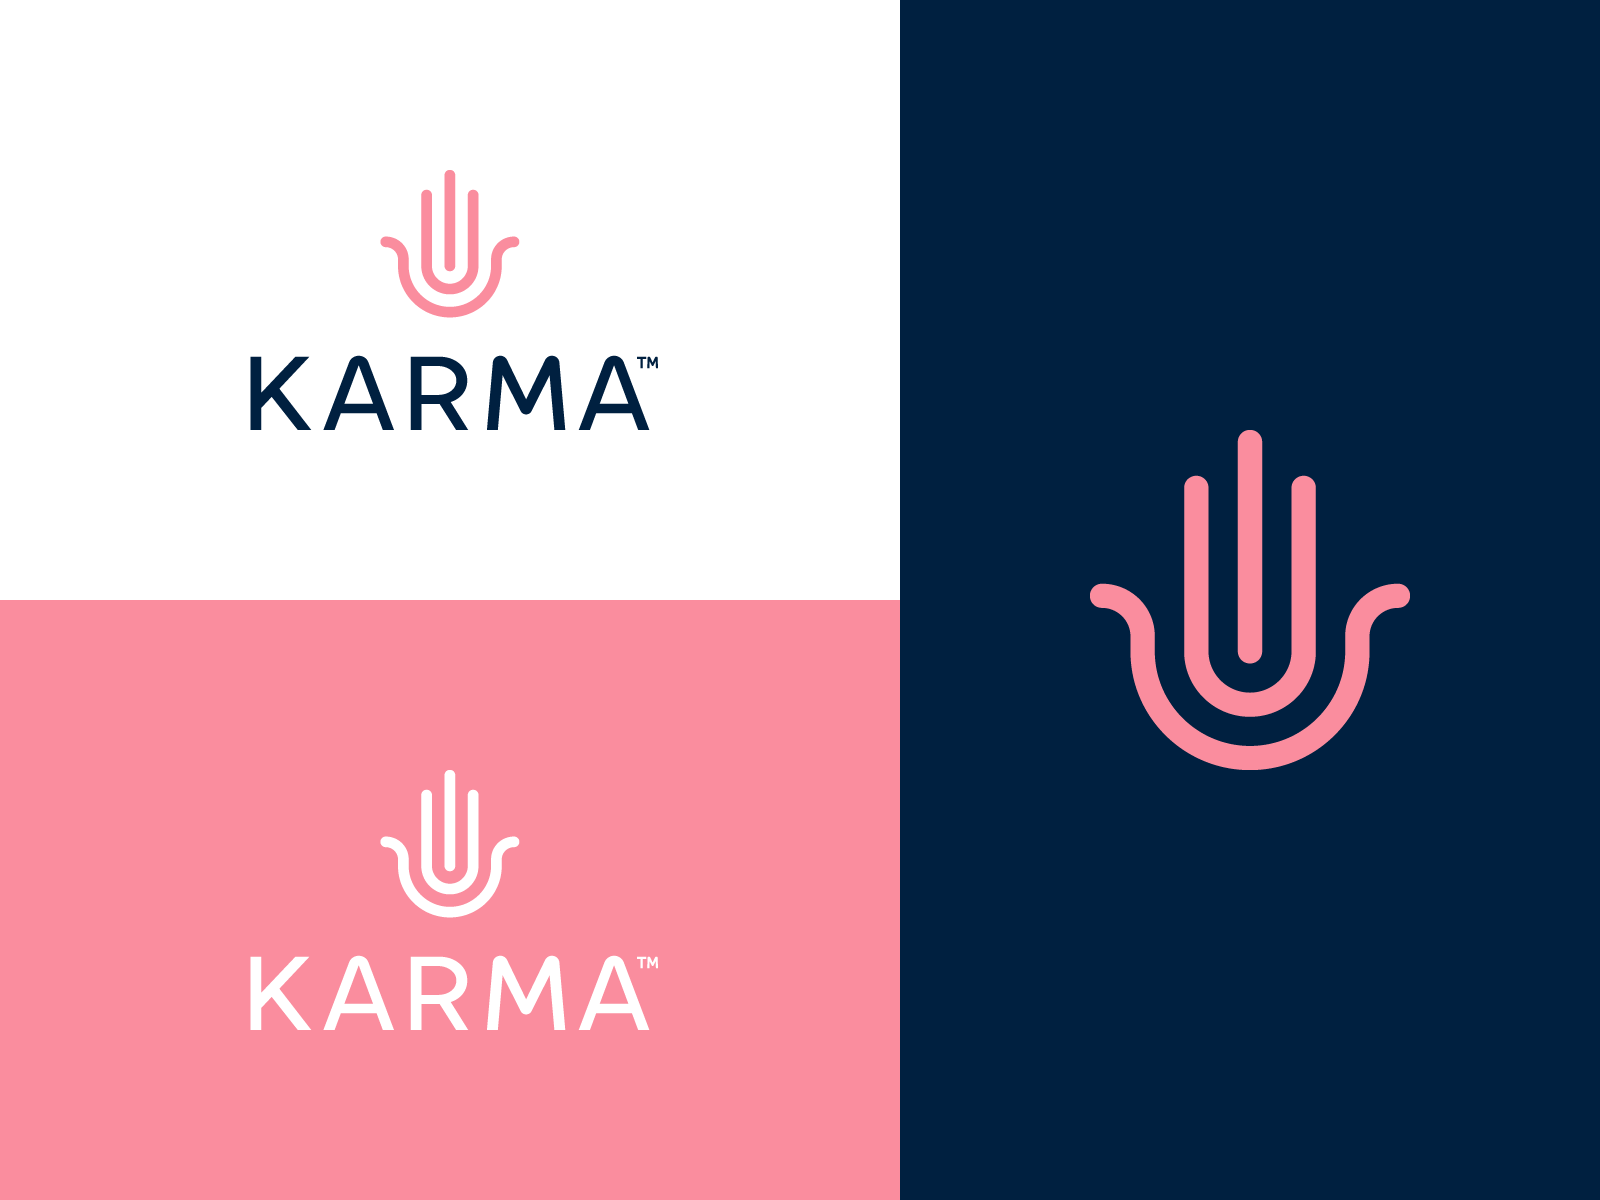 Karma Branding by Omnium on Dribbble